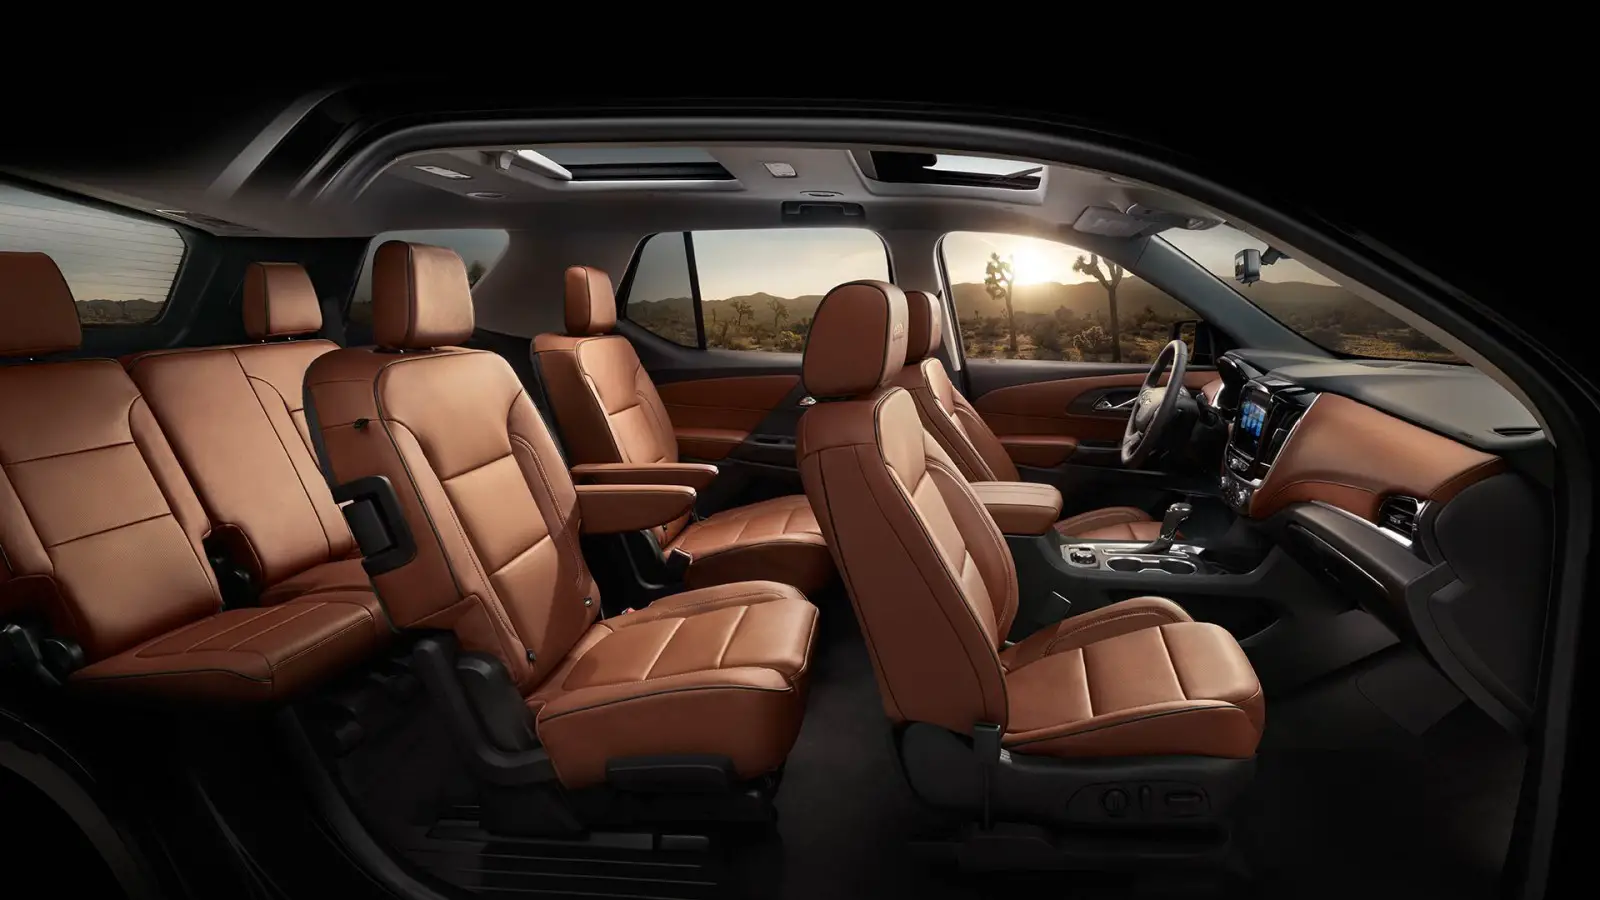 Chevrolet Traverse 2018 interior whole seat view